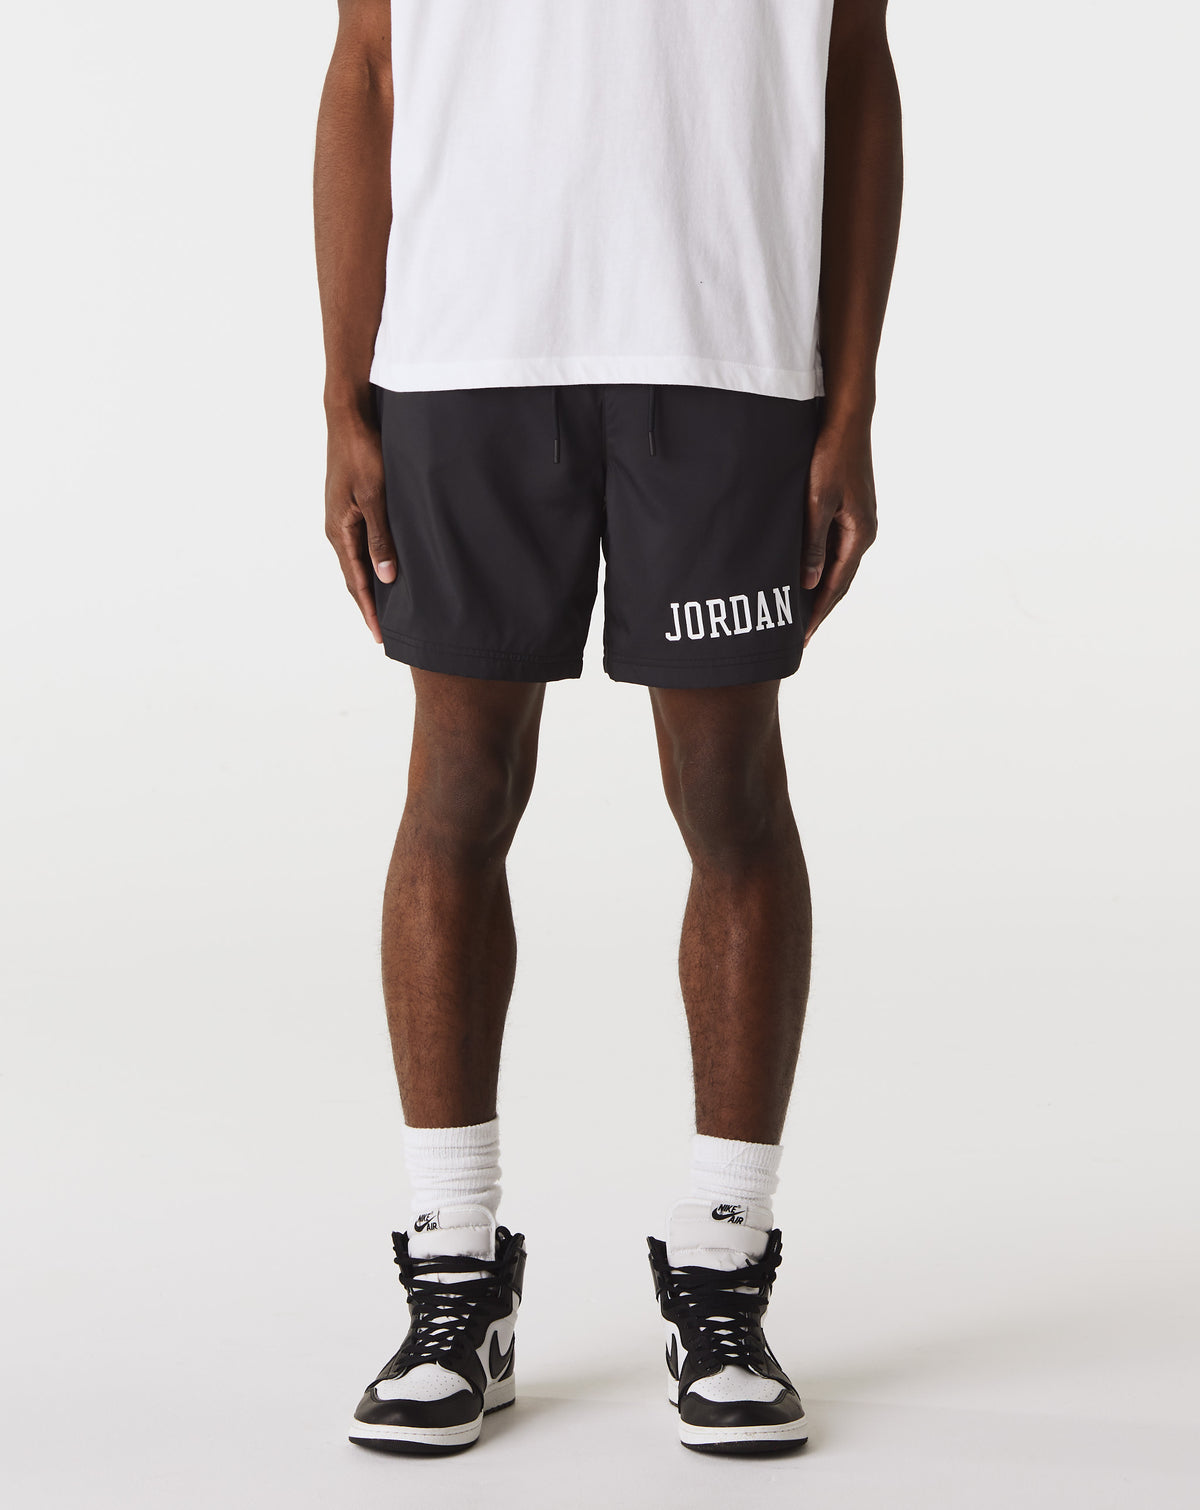 Air Jordan Jordan Essentials Poolside Shorts - Rule of Next Apparel